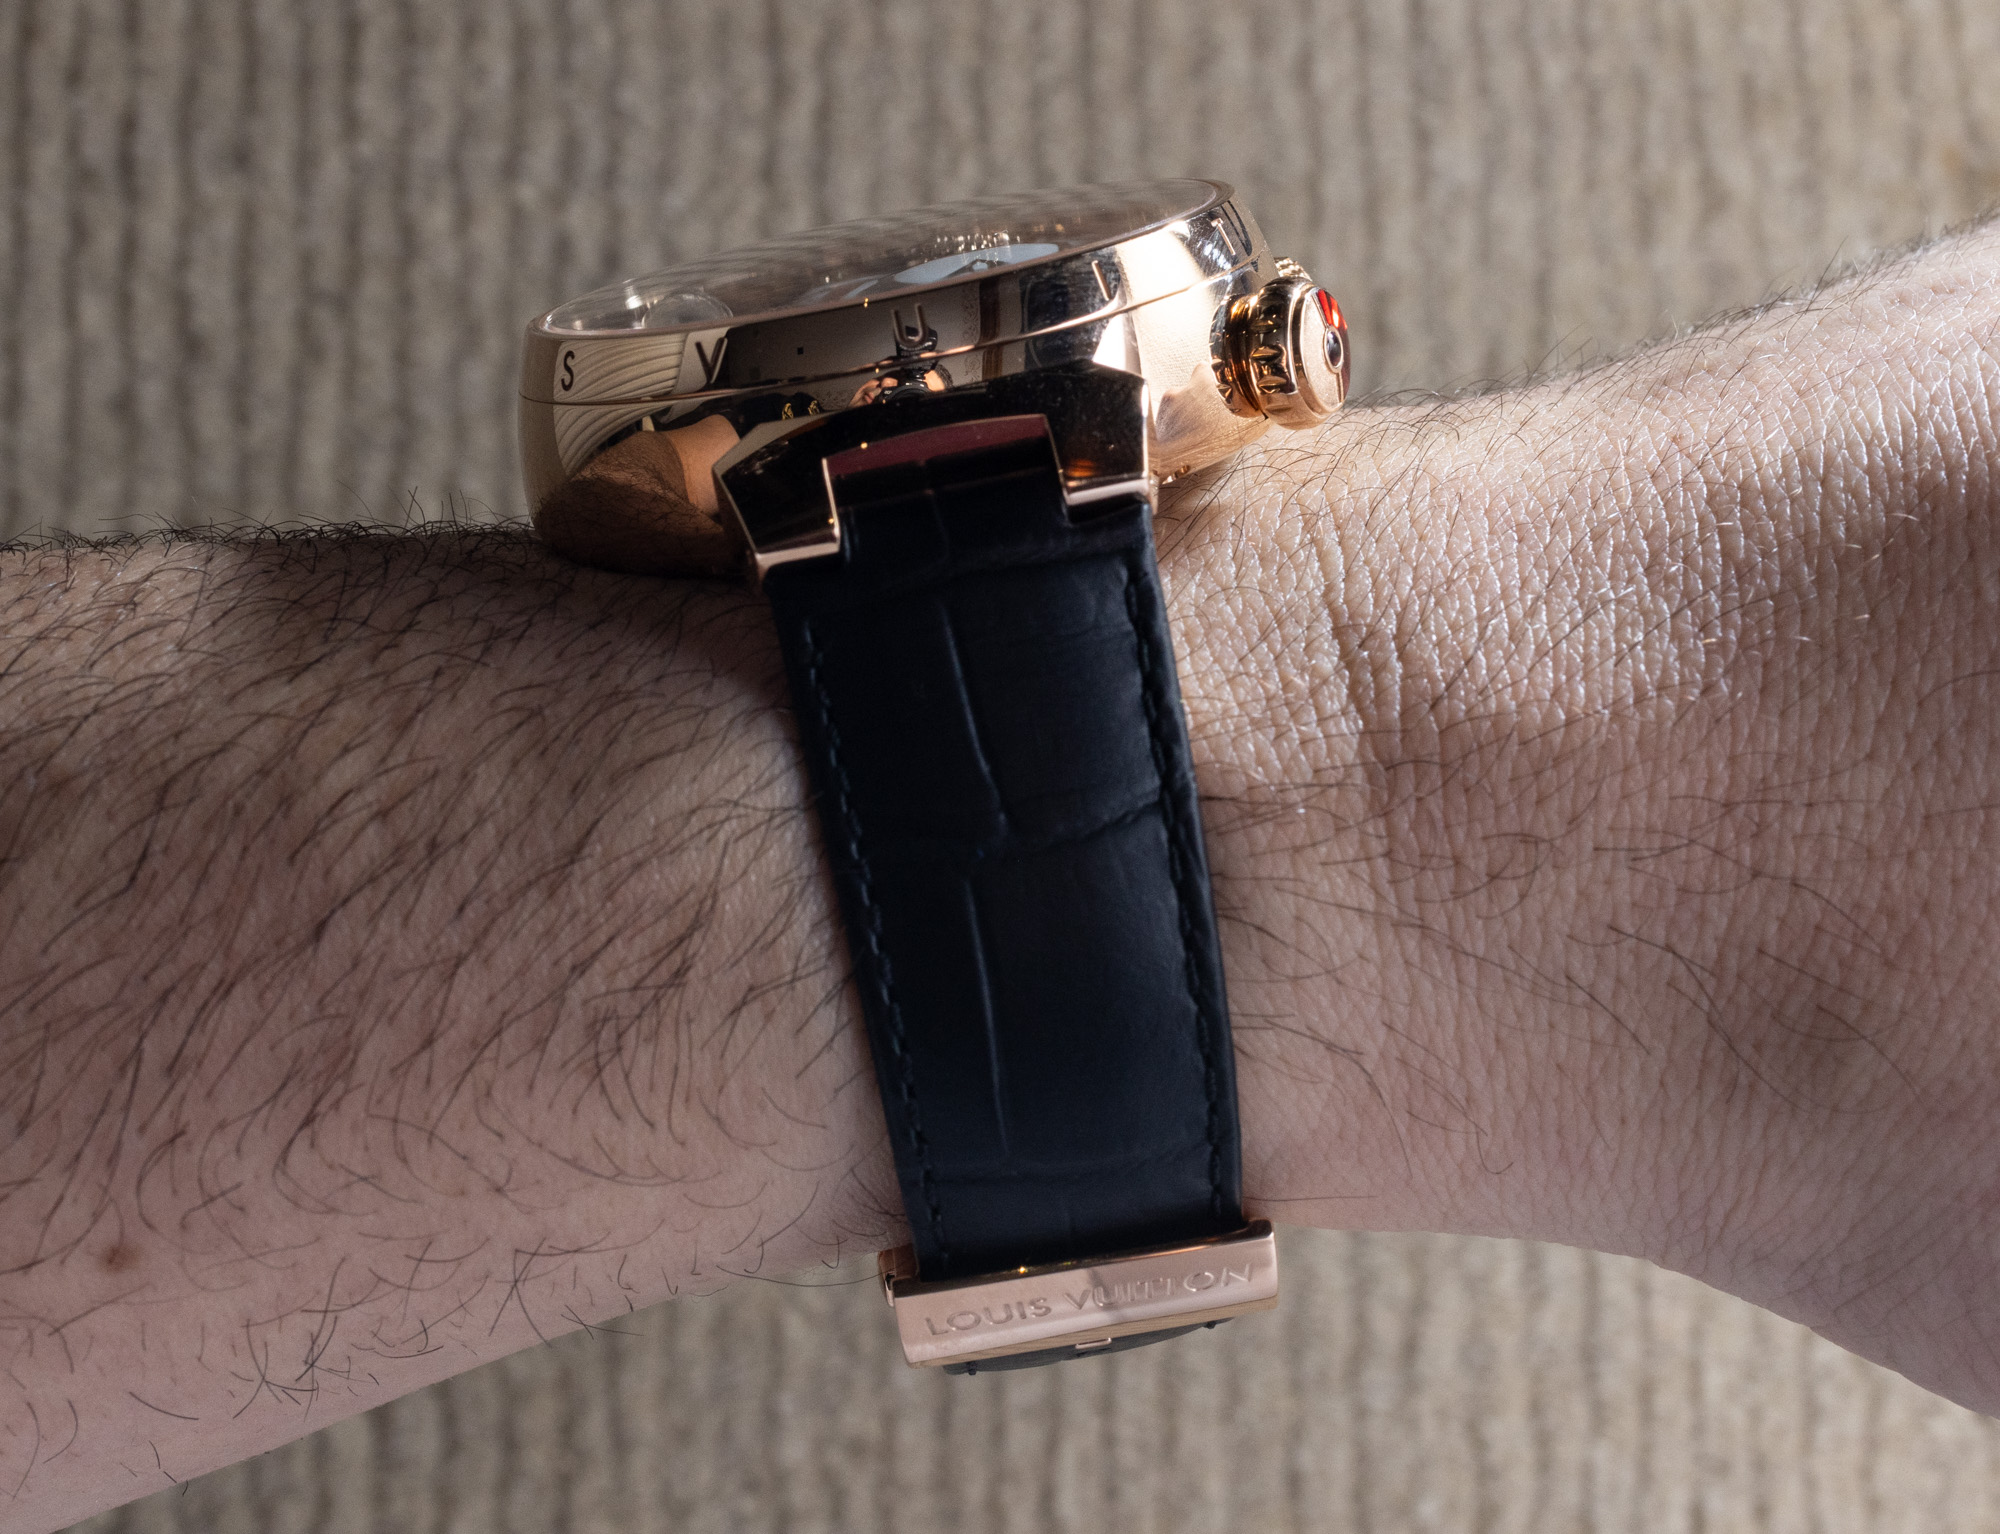 The new Louis Vuitton Tambour Opera Automata? A complicated LV watch. Do  you like it? 📹: @equationdutemps